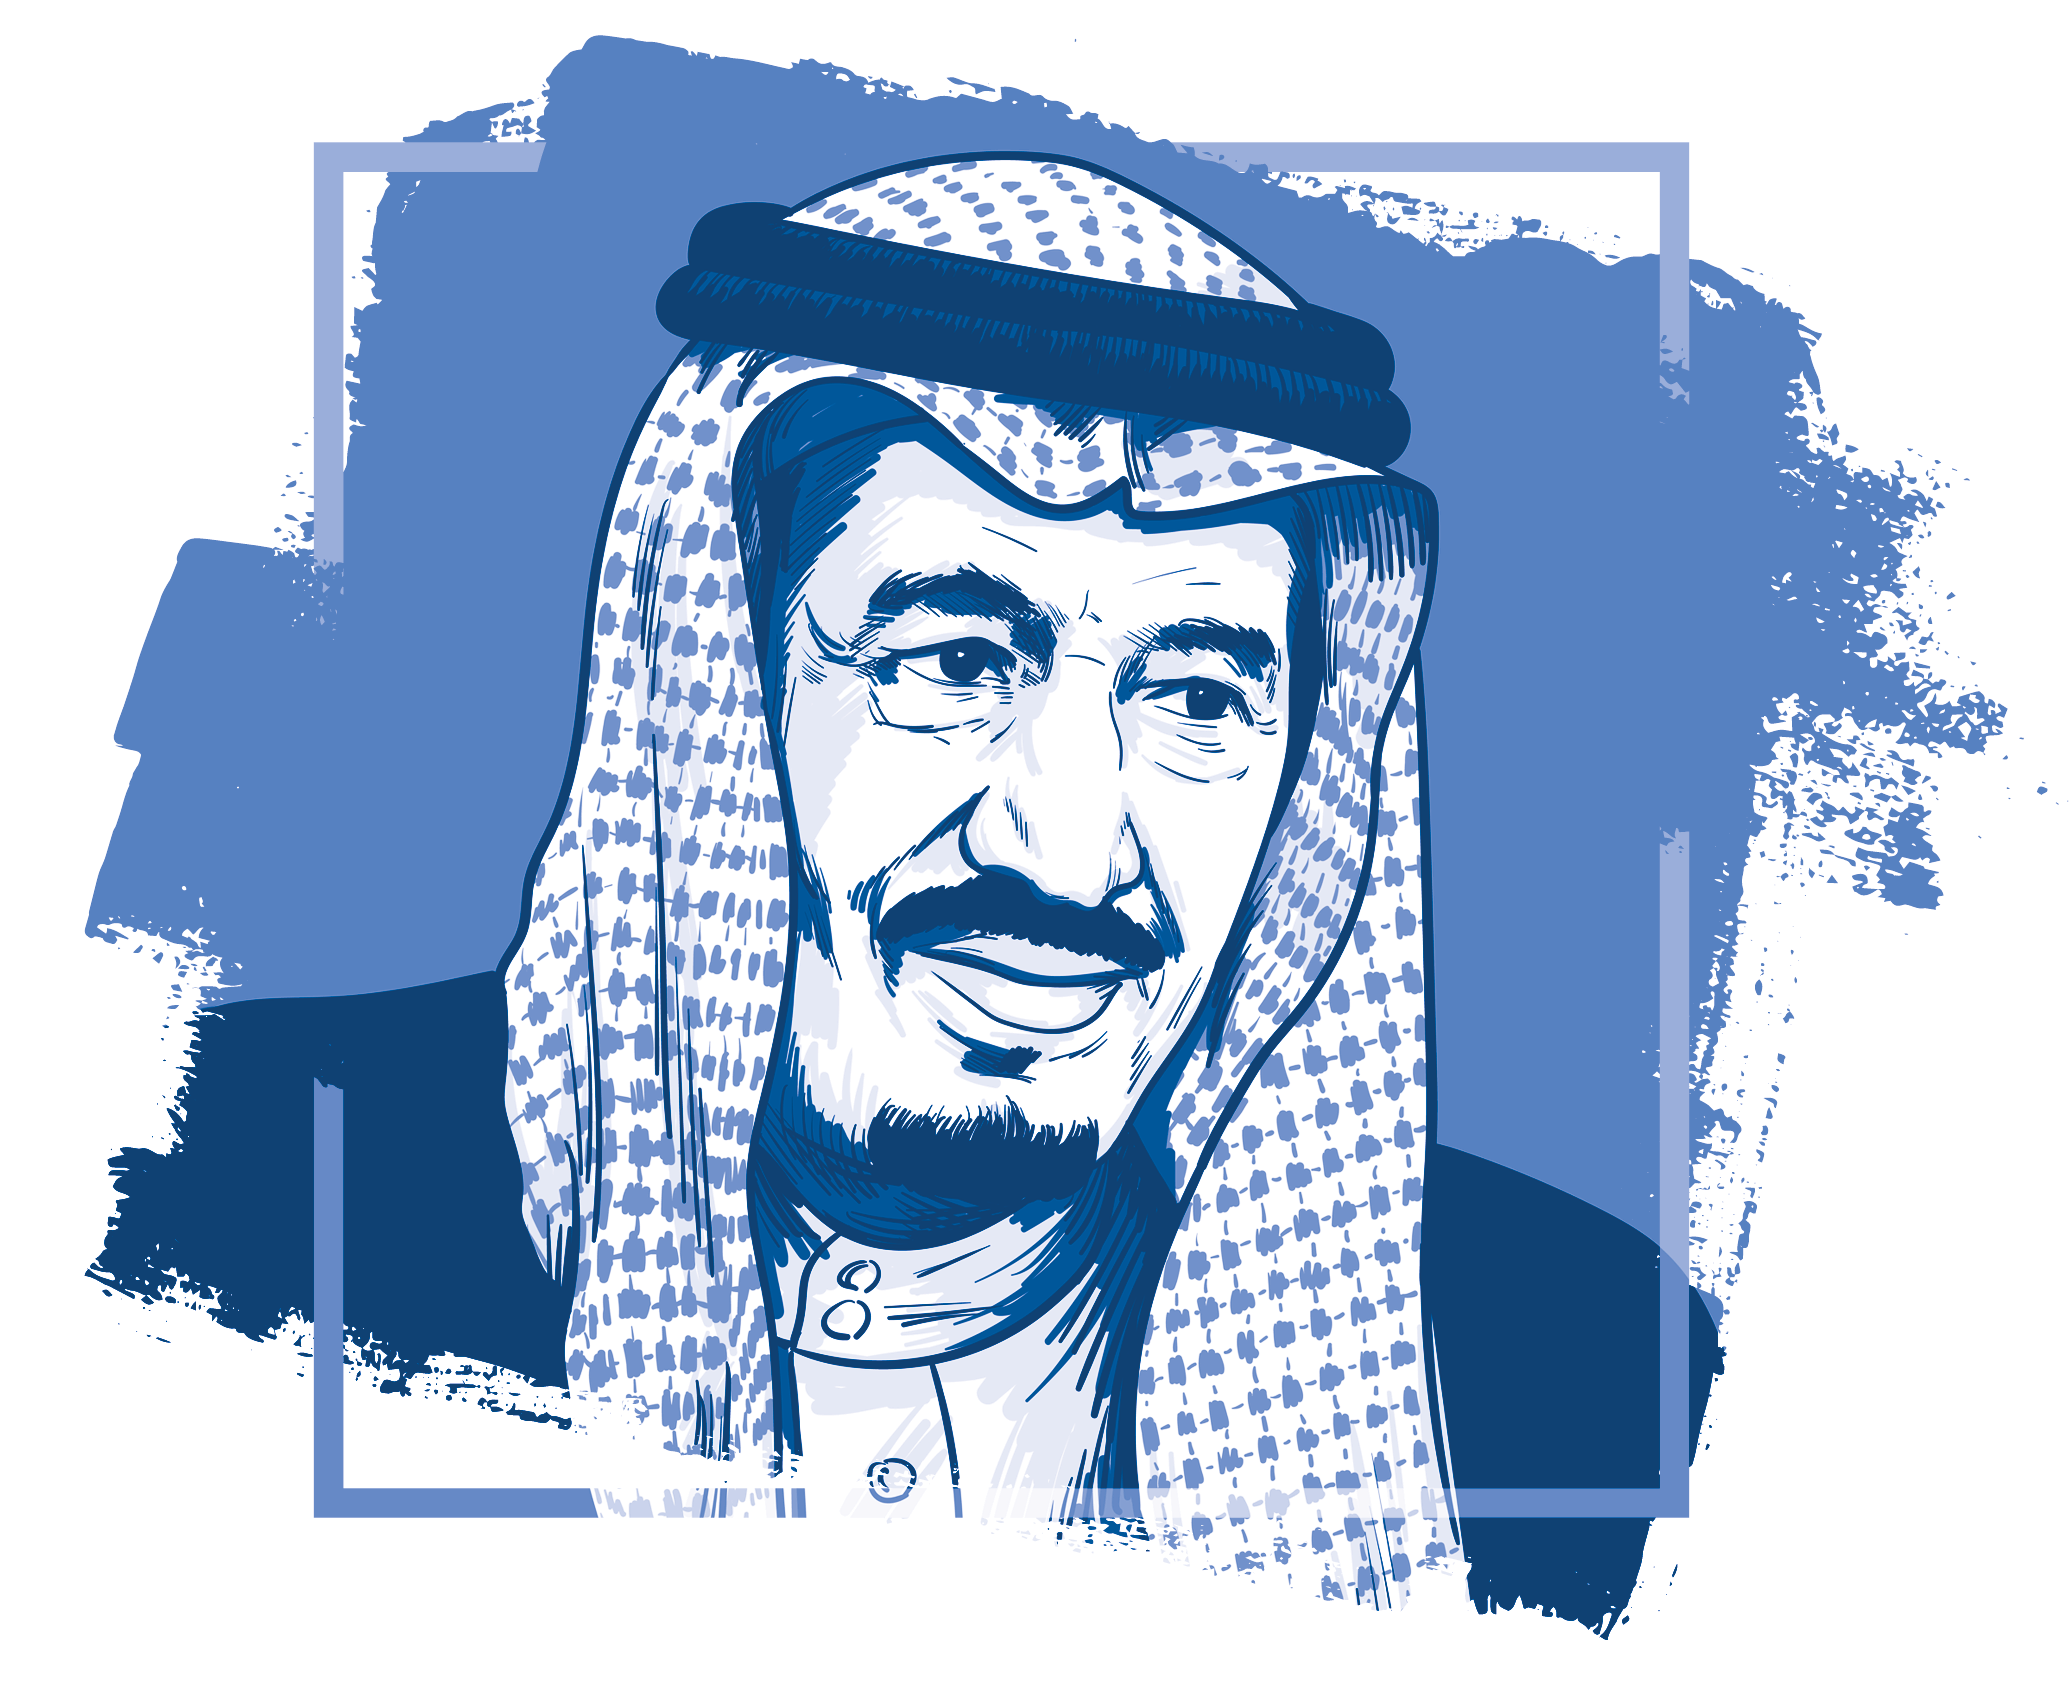 Drawing of Salaman bin Abdulaziz Al Saud, King of Saudi Arabia